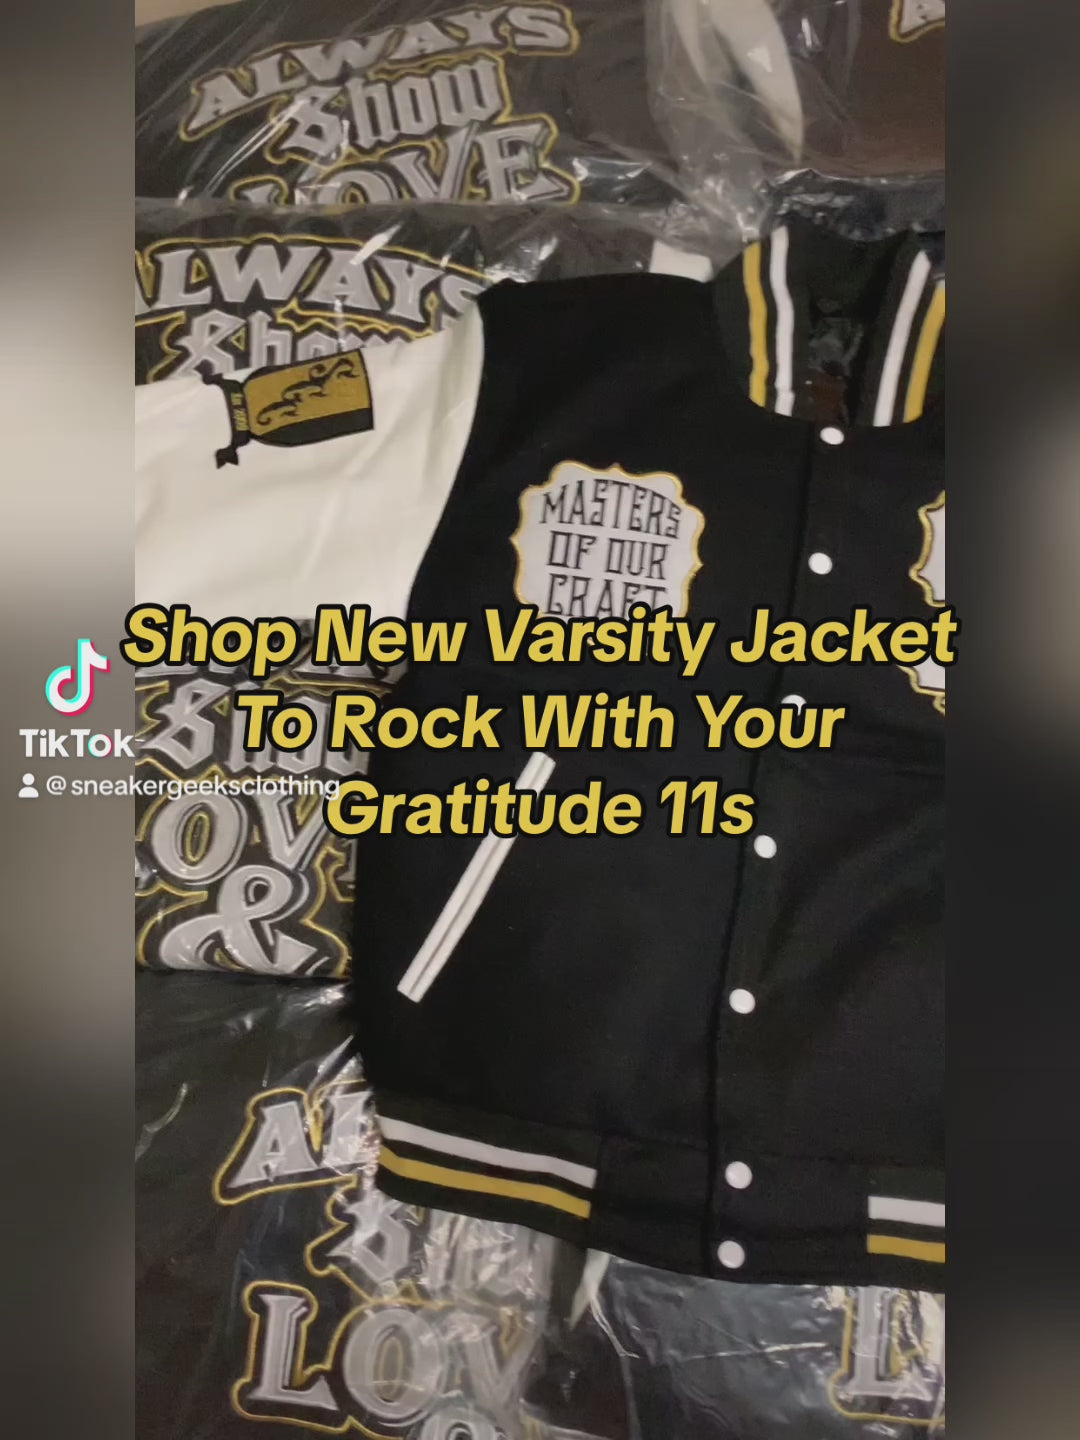 Always Show Love and Gratitude Varsity Jacket to match Retro Jordan 11 Gratitude sneakers